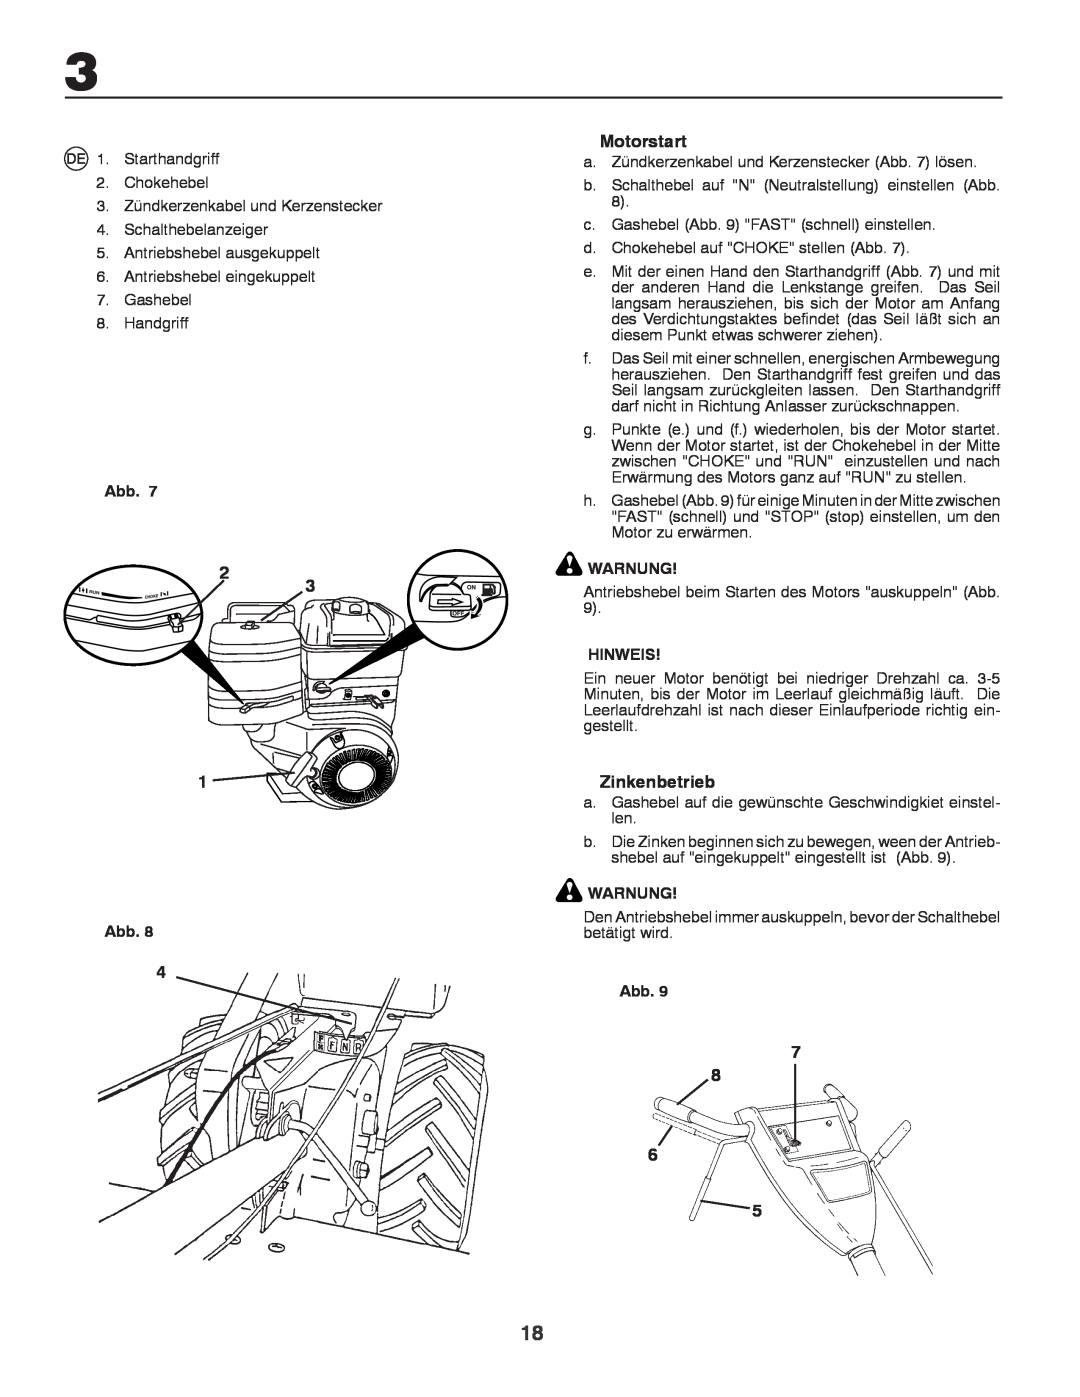 Husqvarna CRT81 instruction manual Motorstart, Zinkenbetrieb, Warnung, Hinweis 